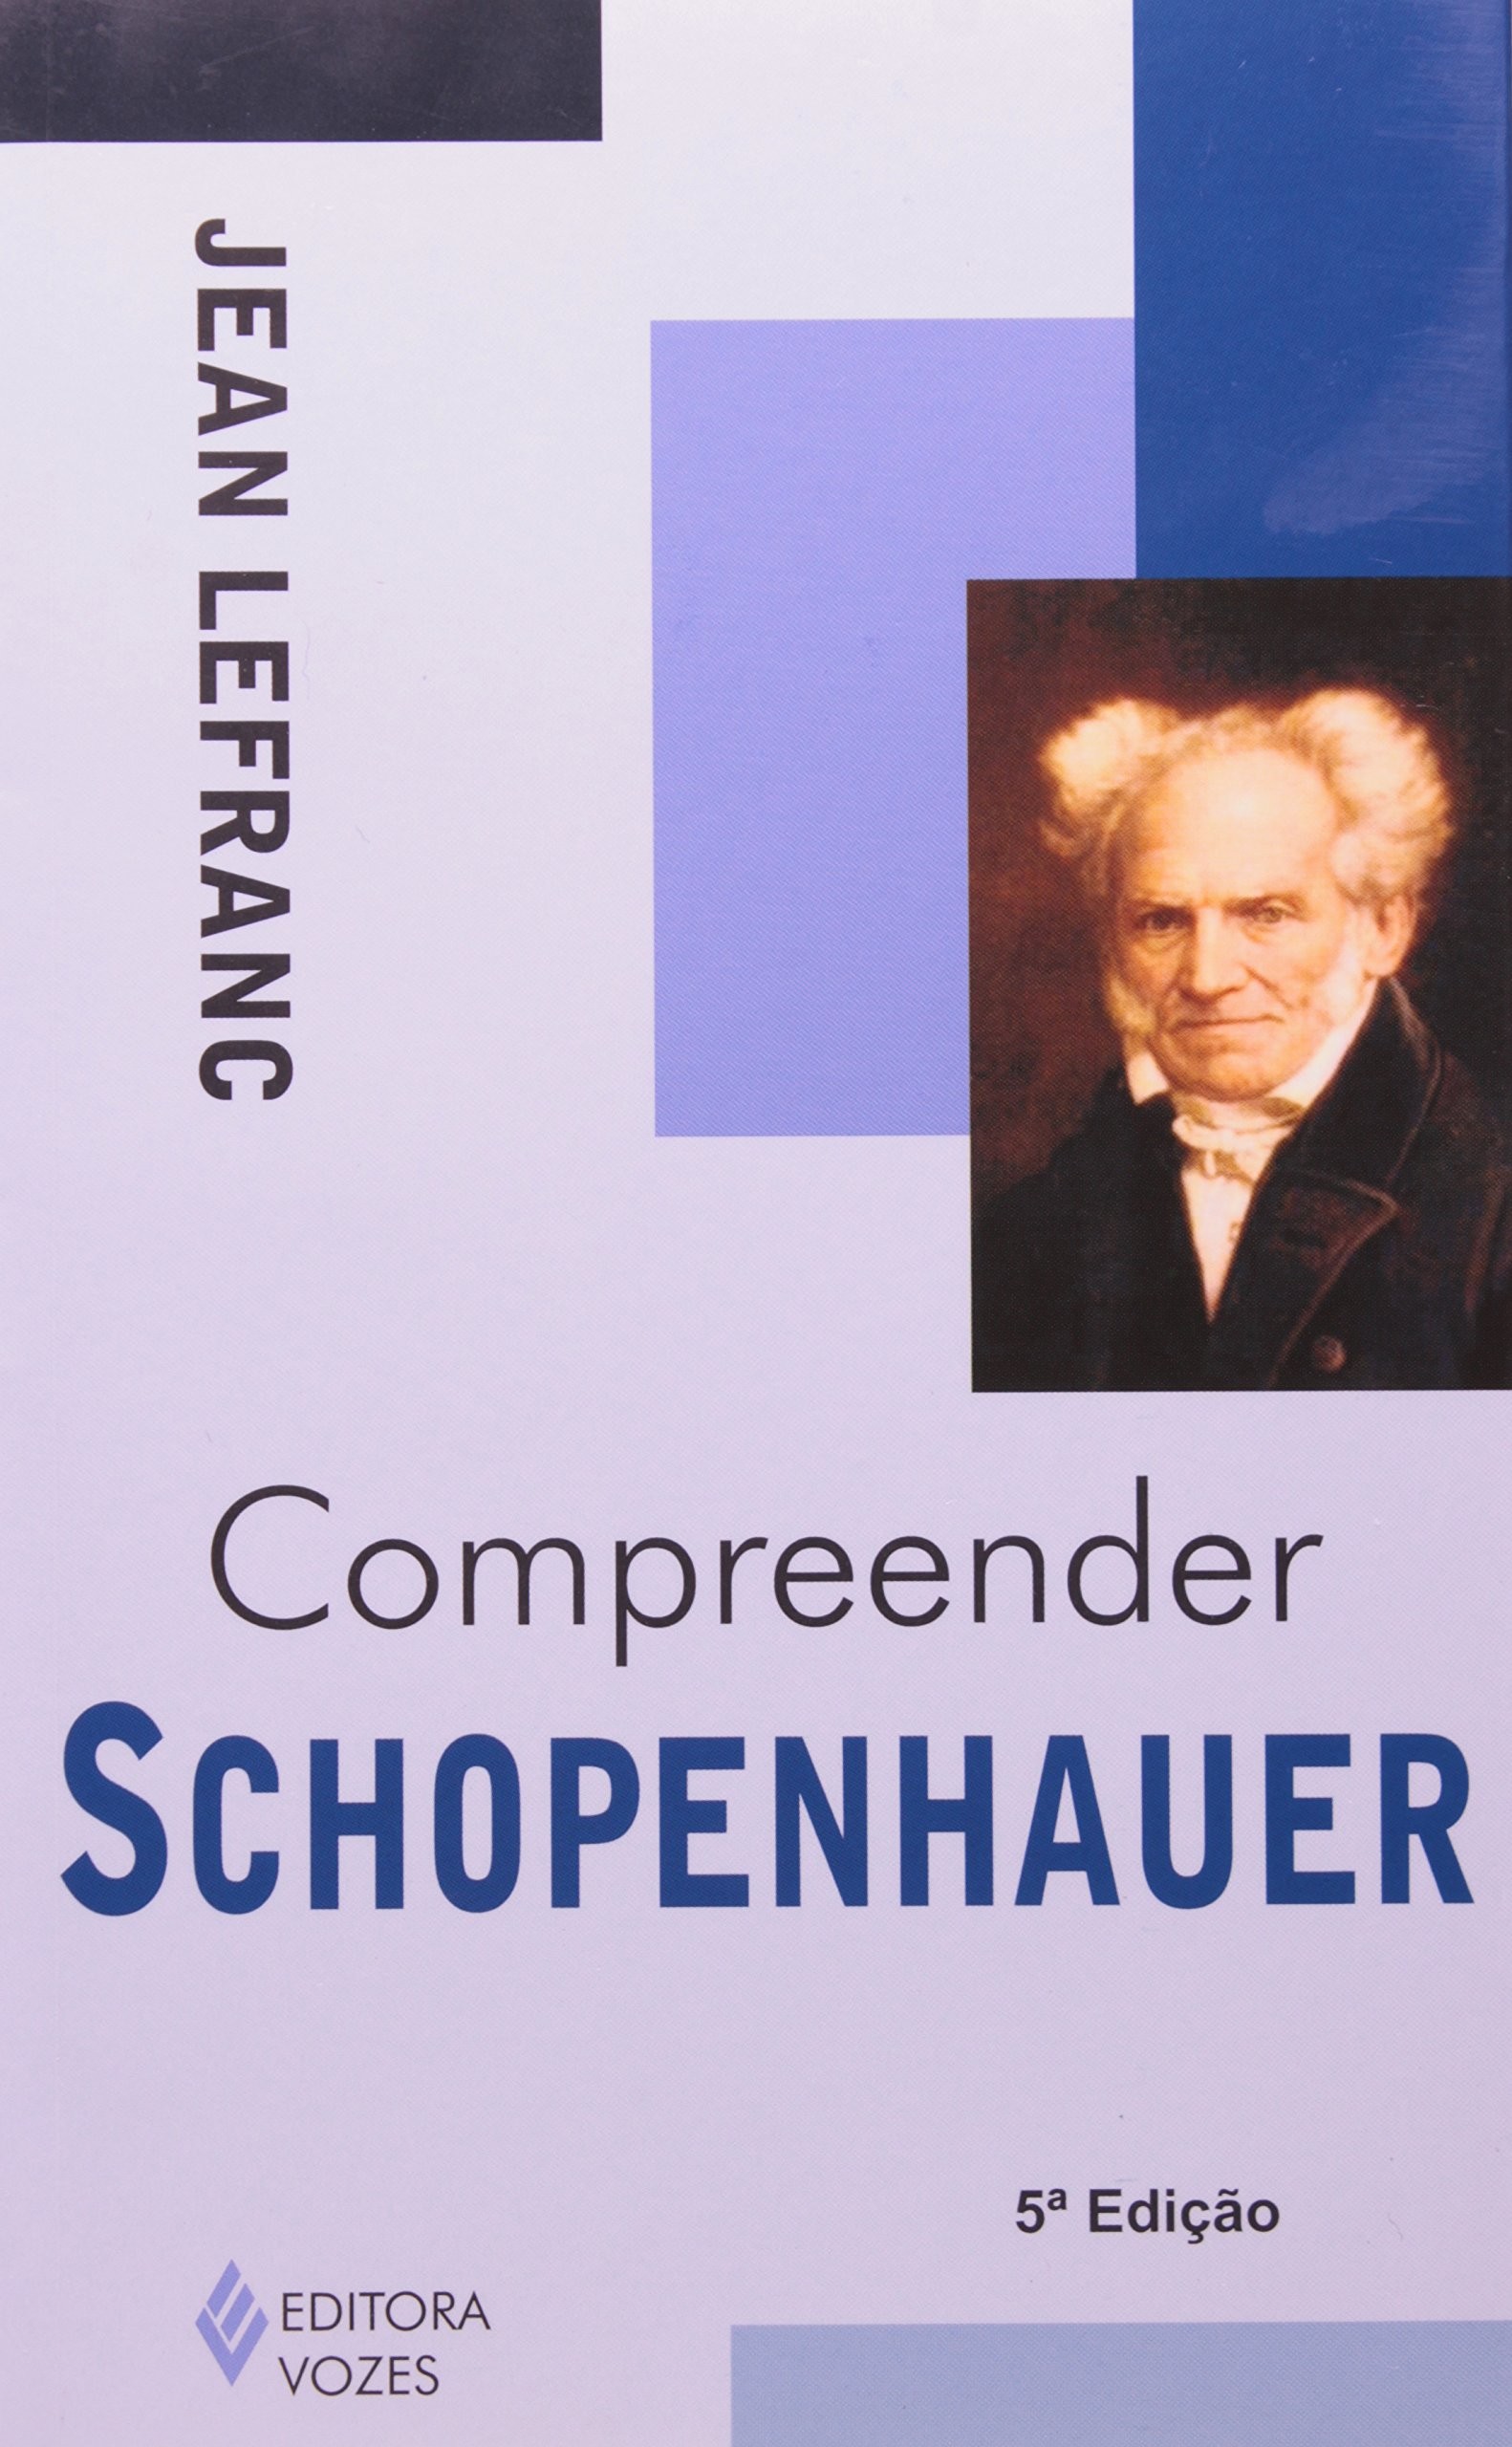 Compreender Shopenhauer